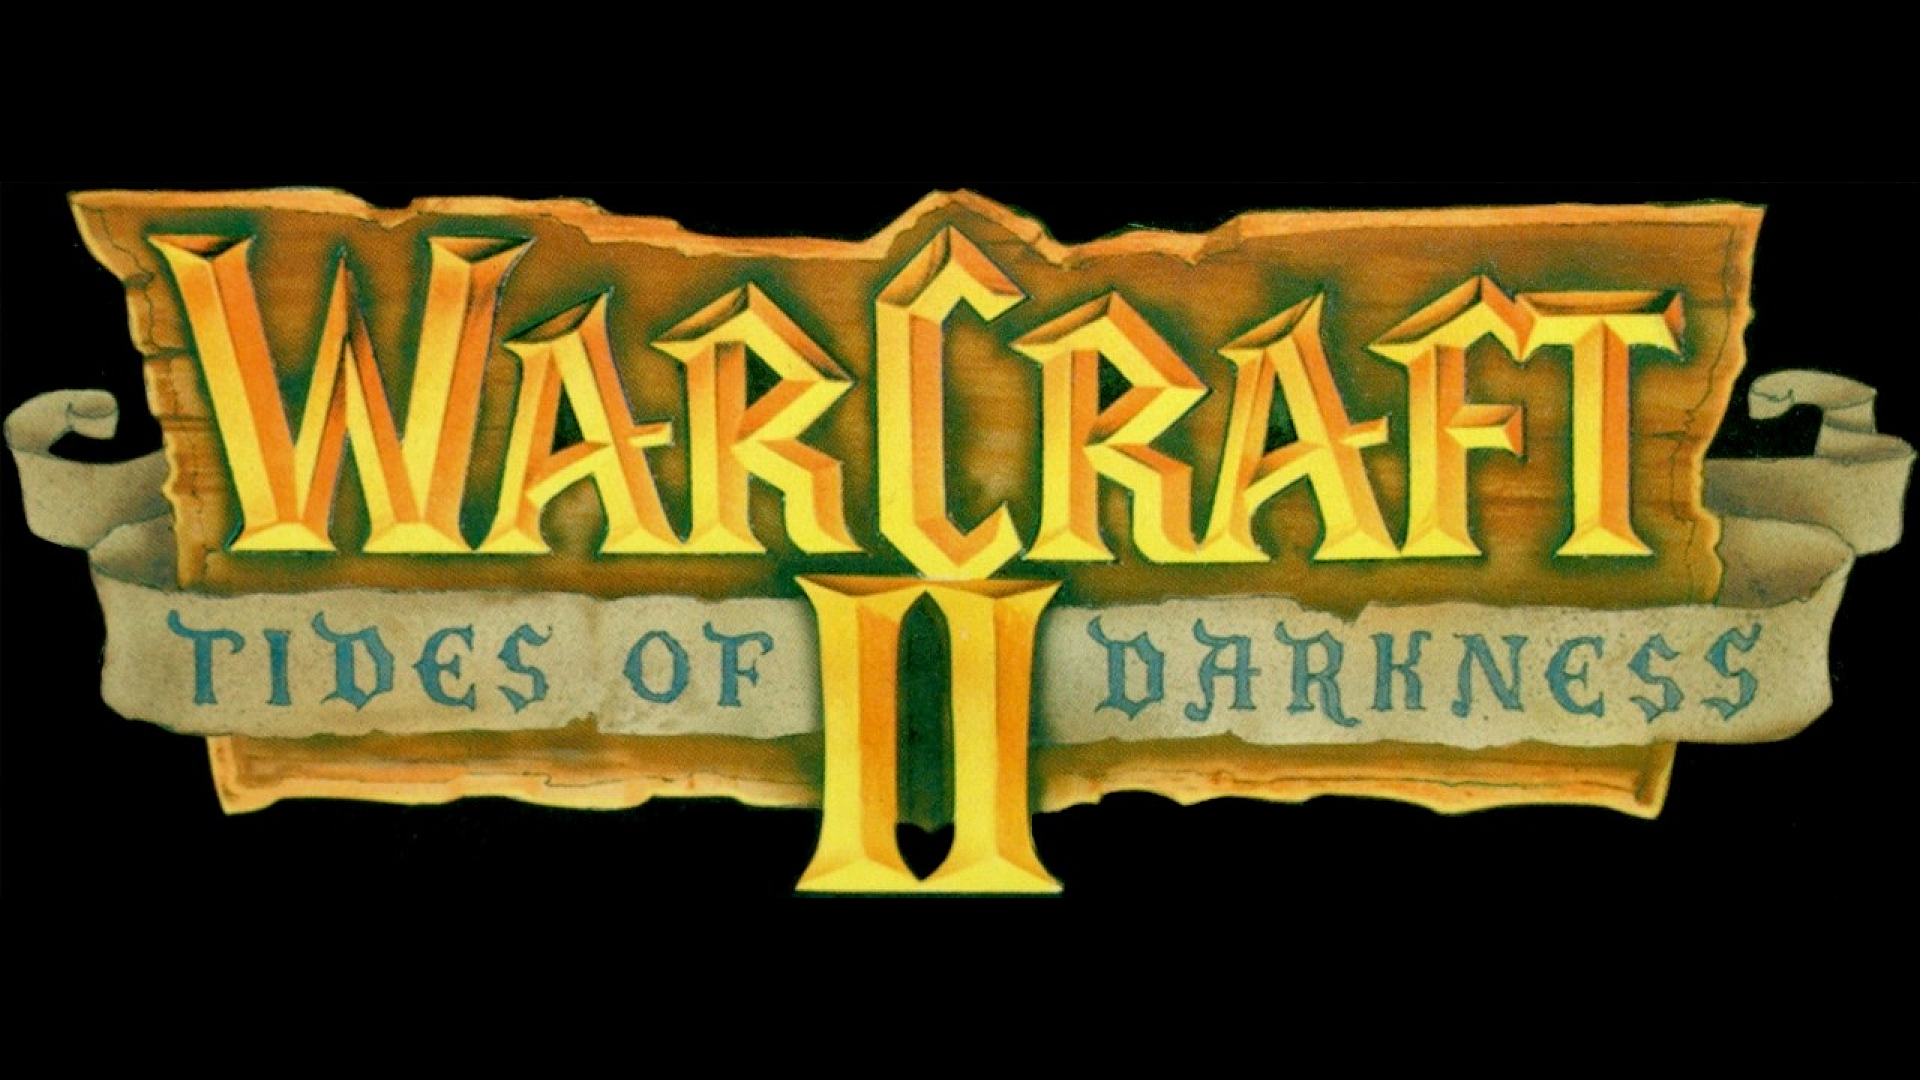 Warcraft II: Tides of Darkness Logo